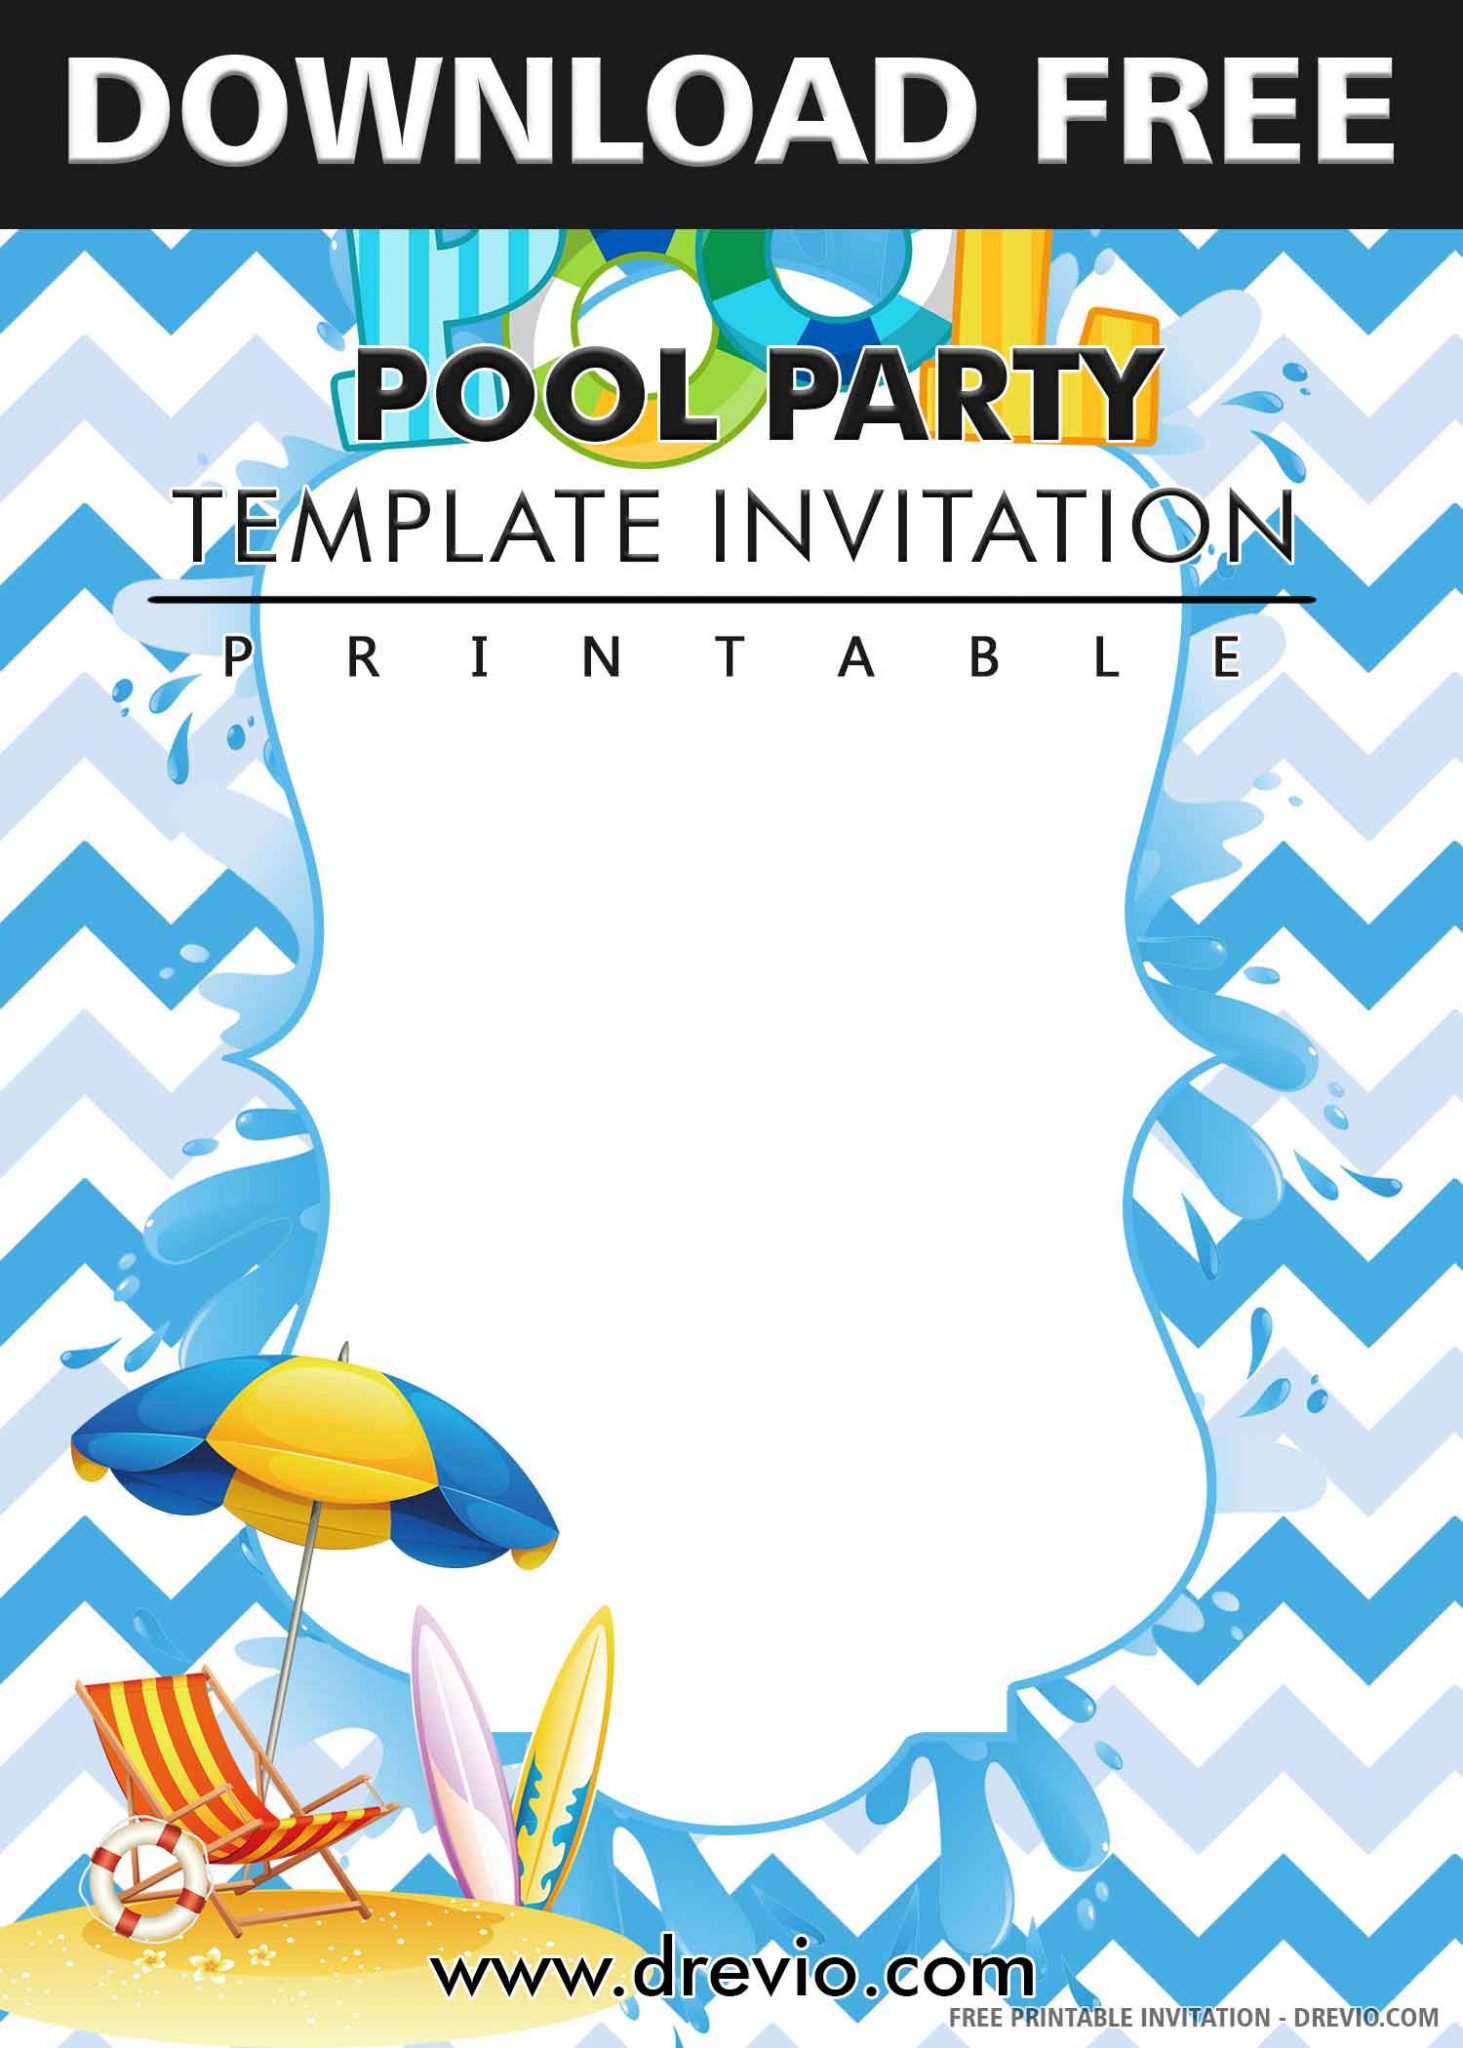 (FREE PRINTABLE) Pool Party Birthday Invitation Templates Download